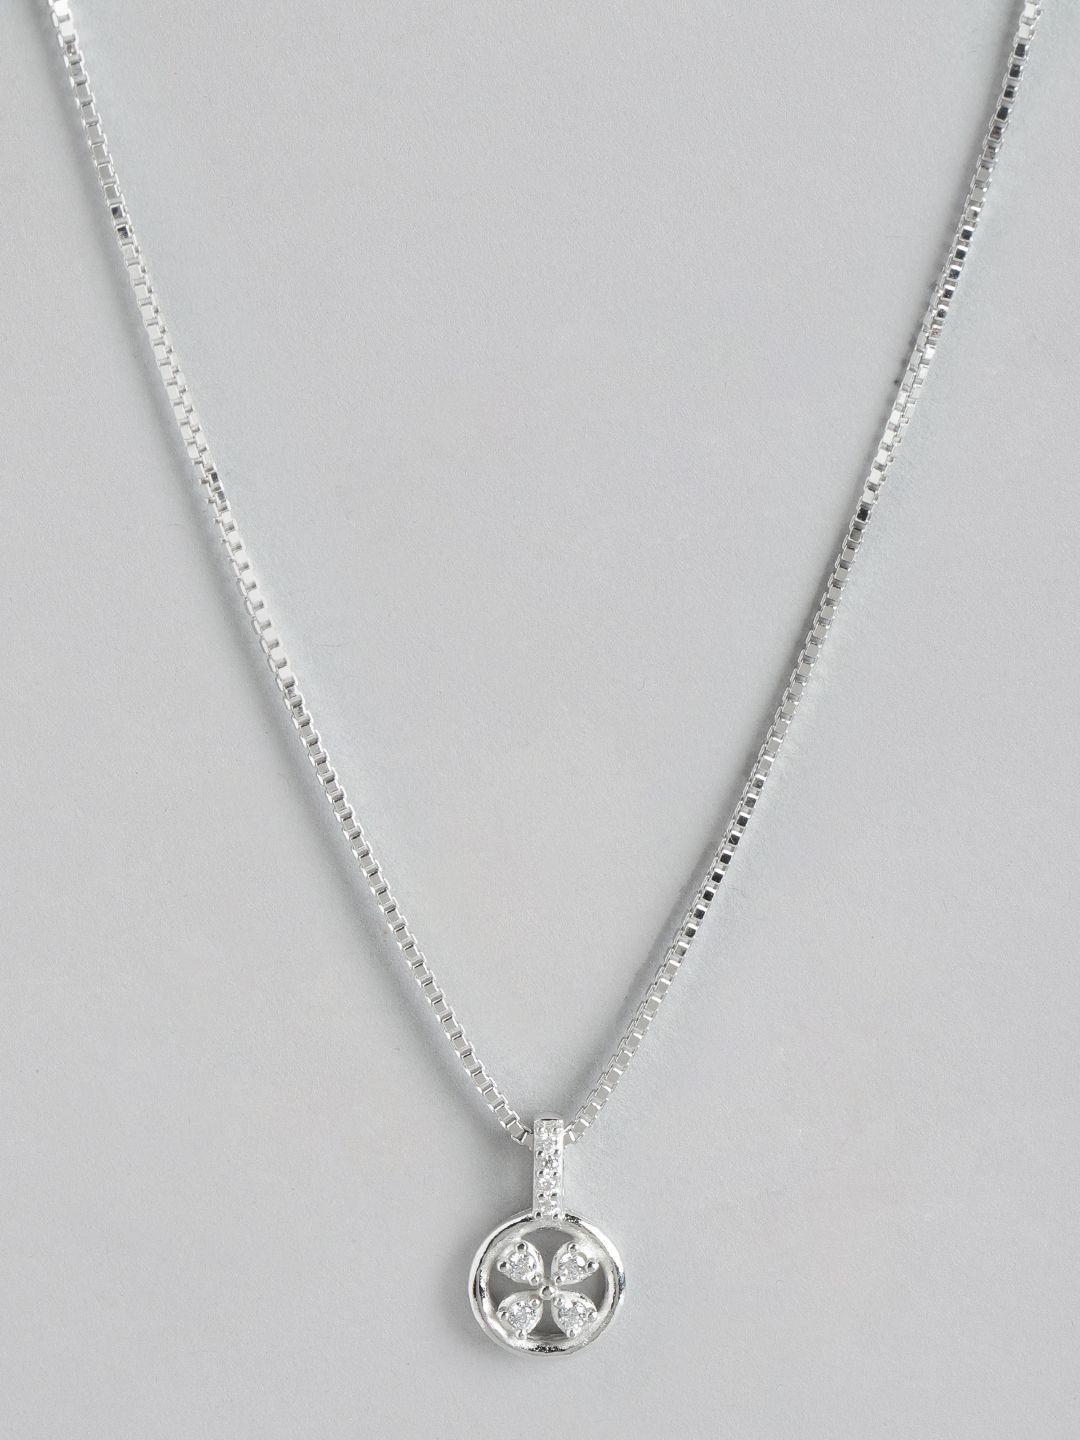 carlton-london-women-rhodium-plated-cz-studded-pendant-with-chain